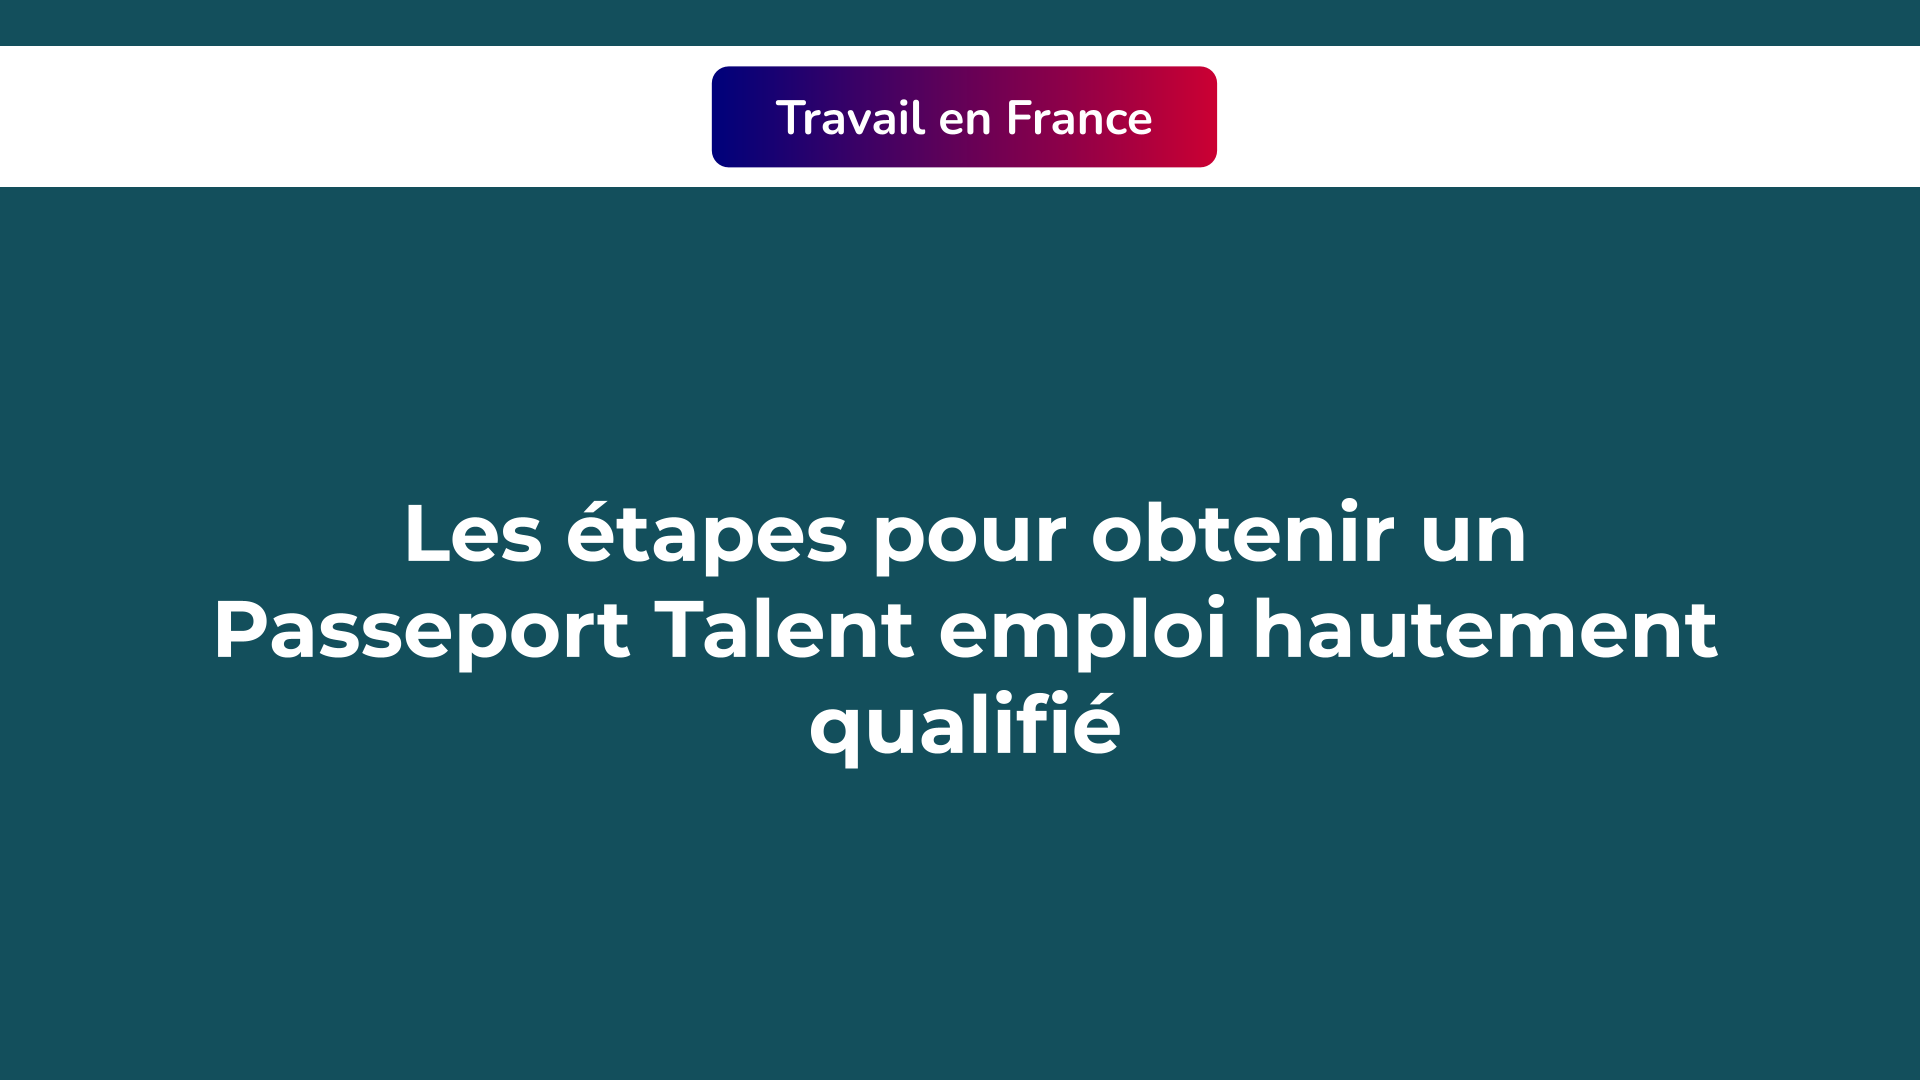 Passeport Talent emploi hautement qualifié